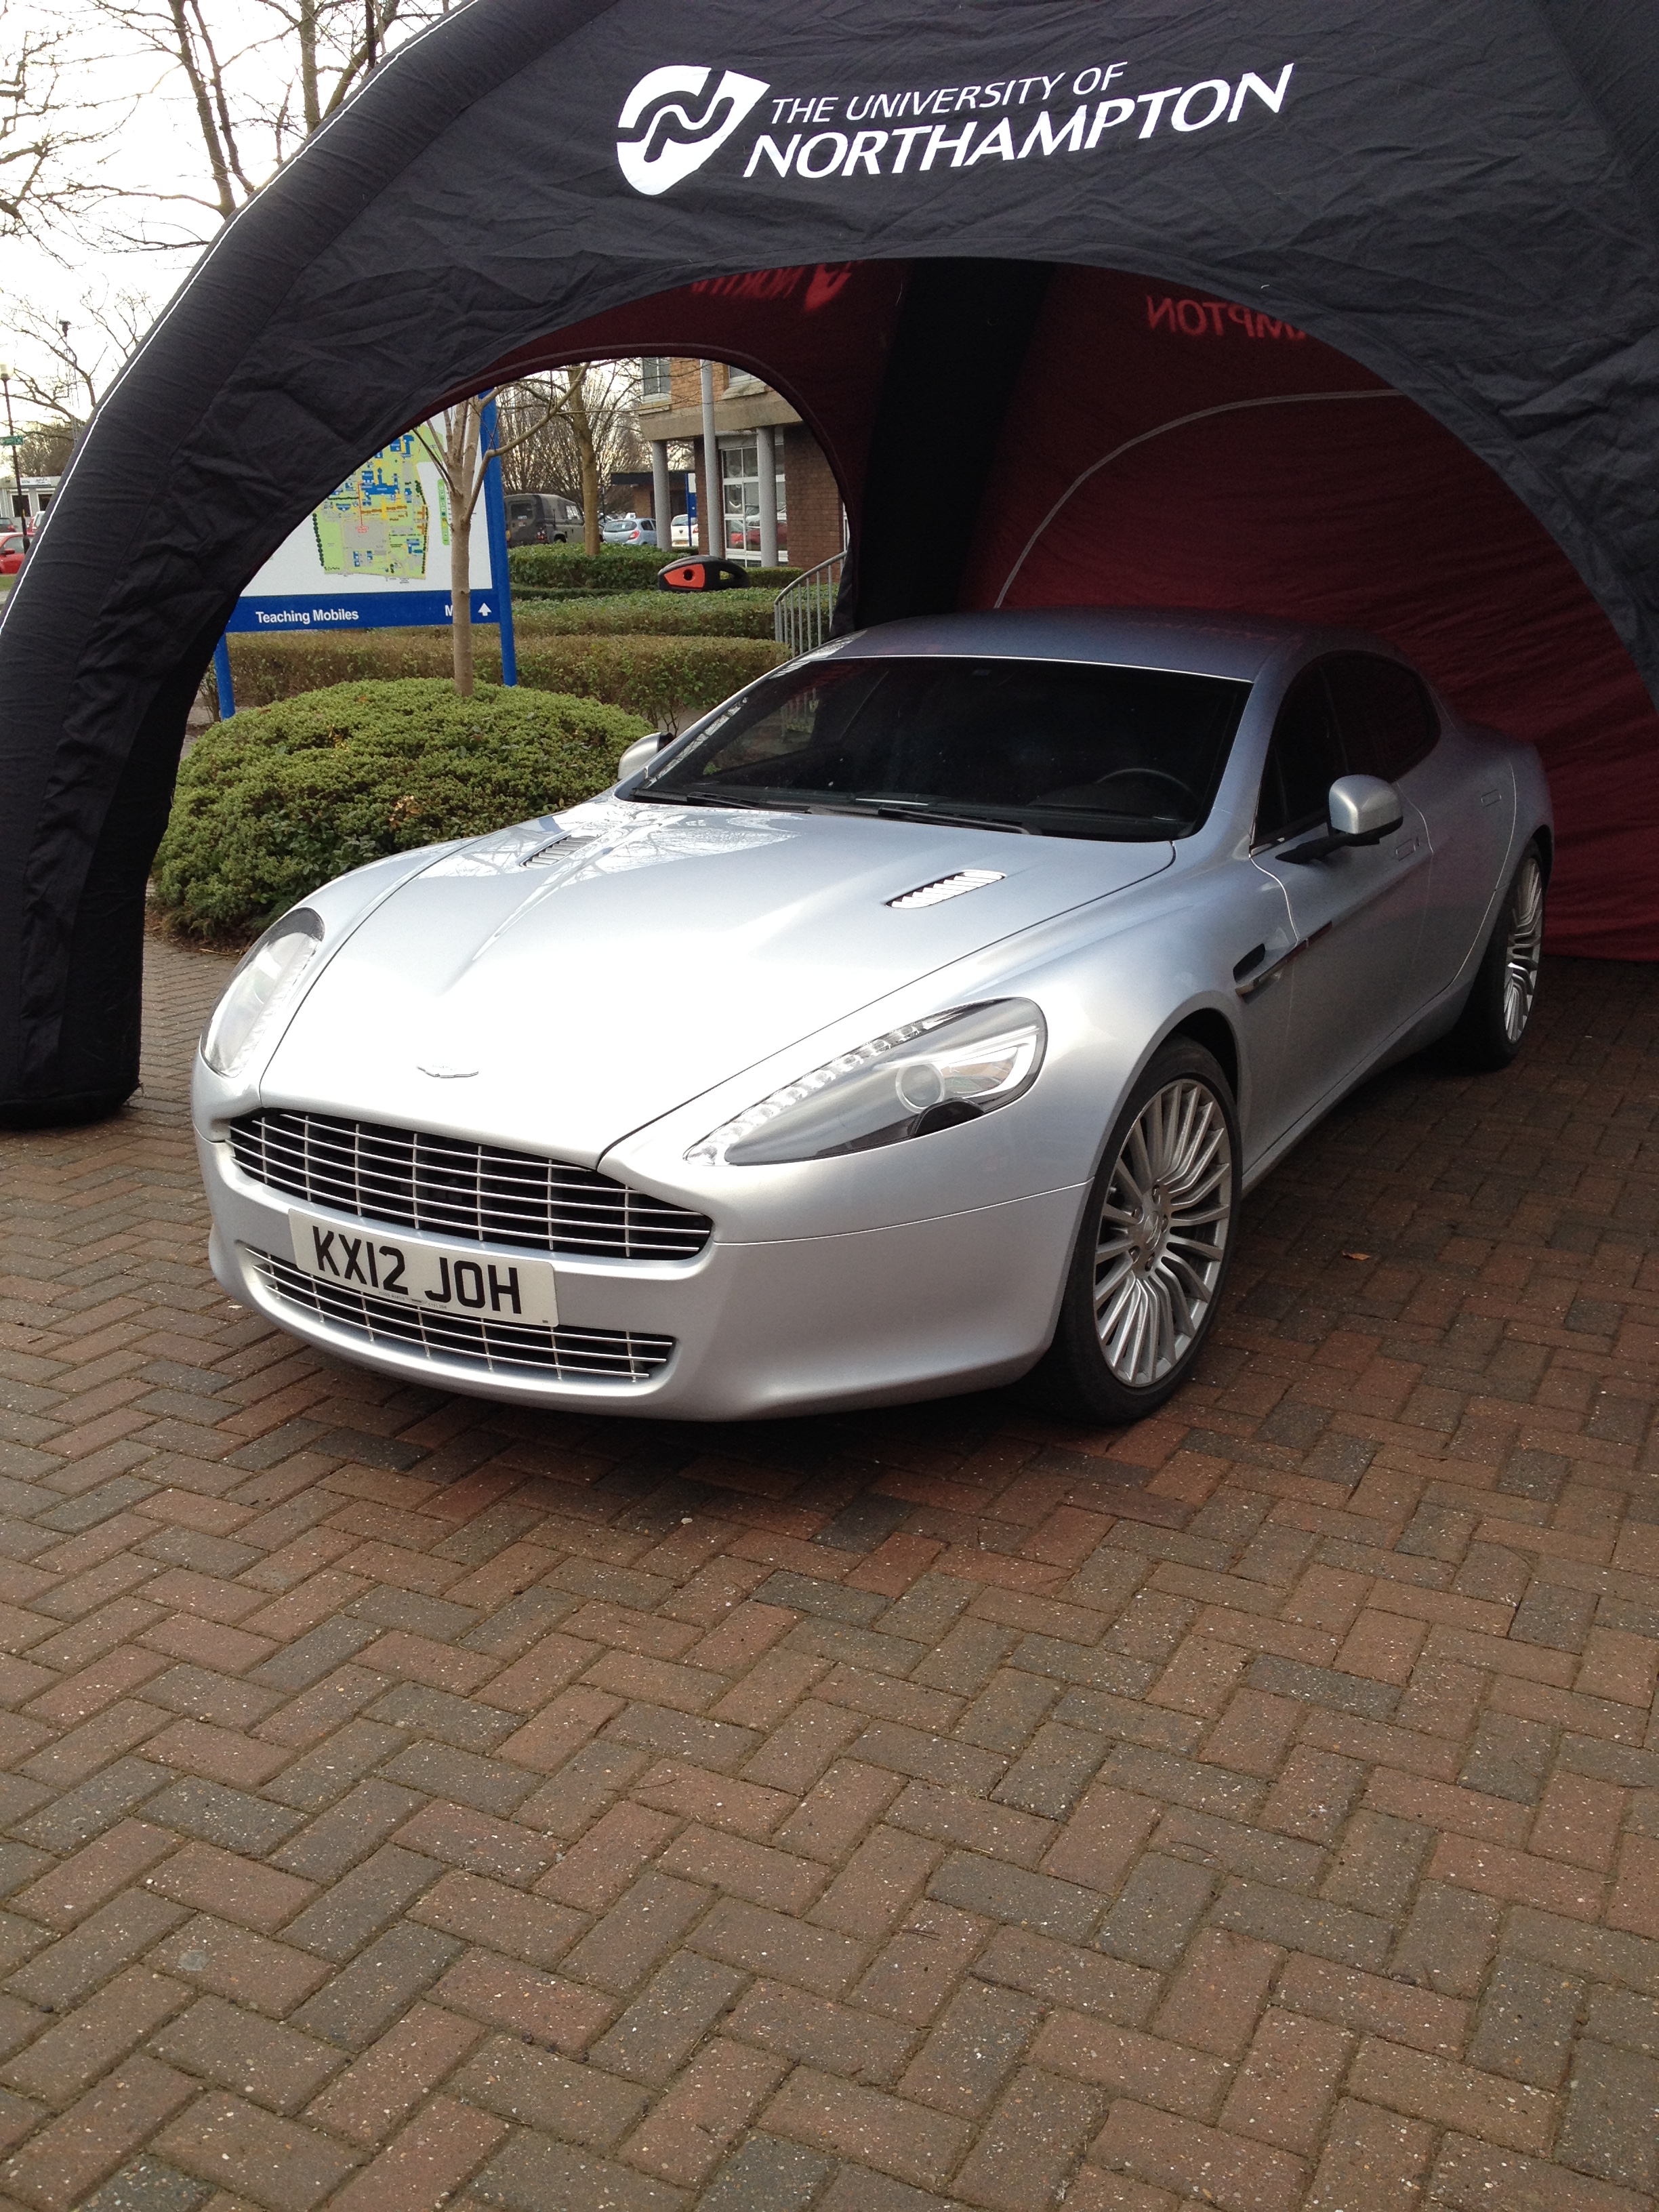 Aston Martin at the University of Northampton